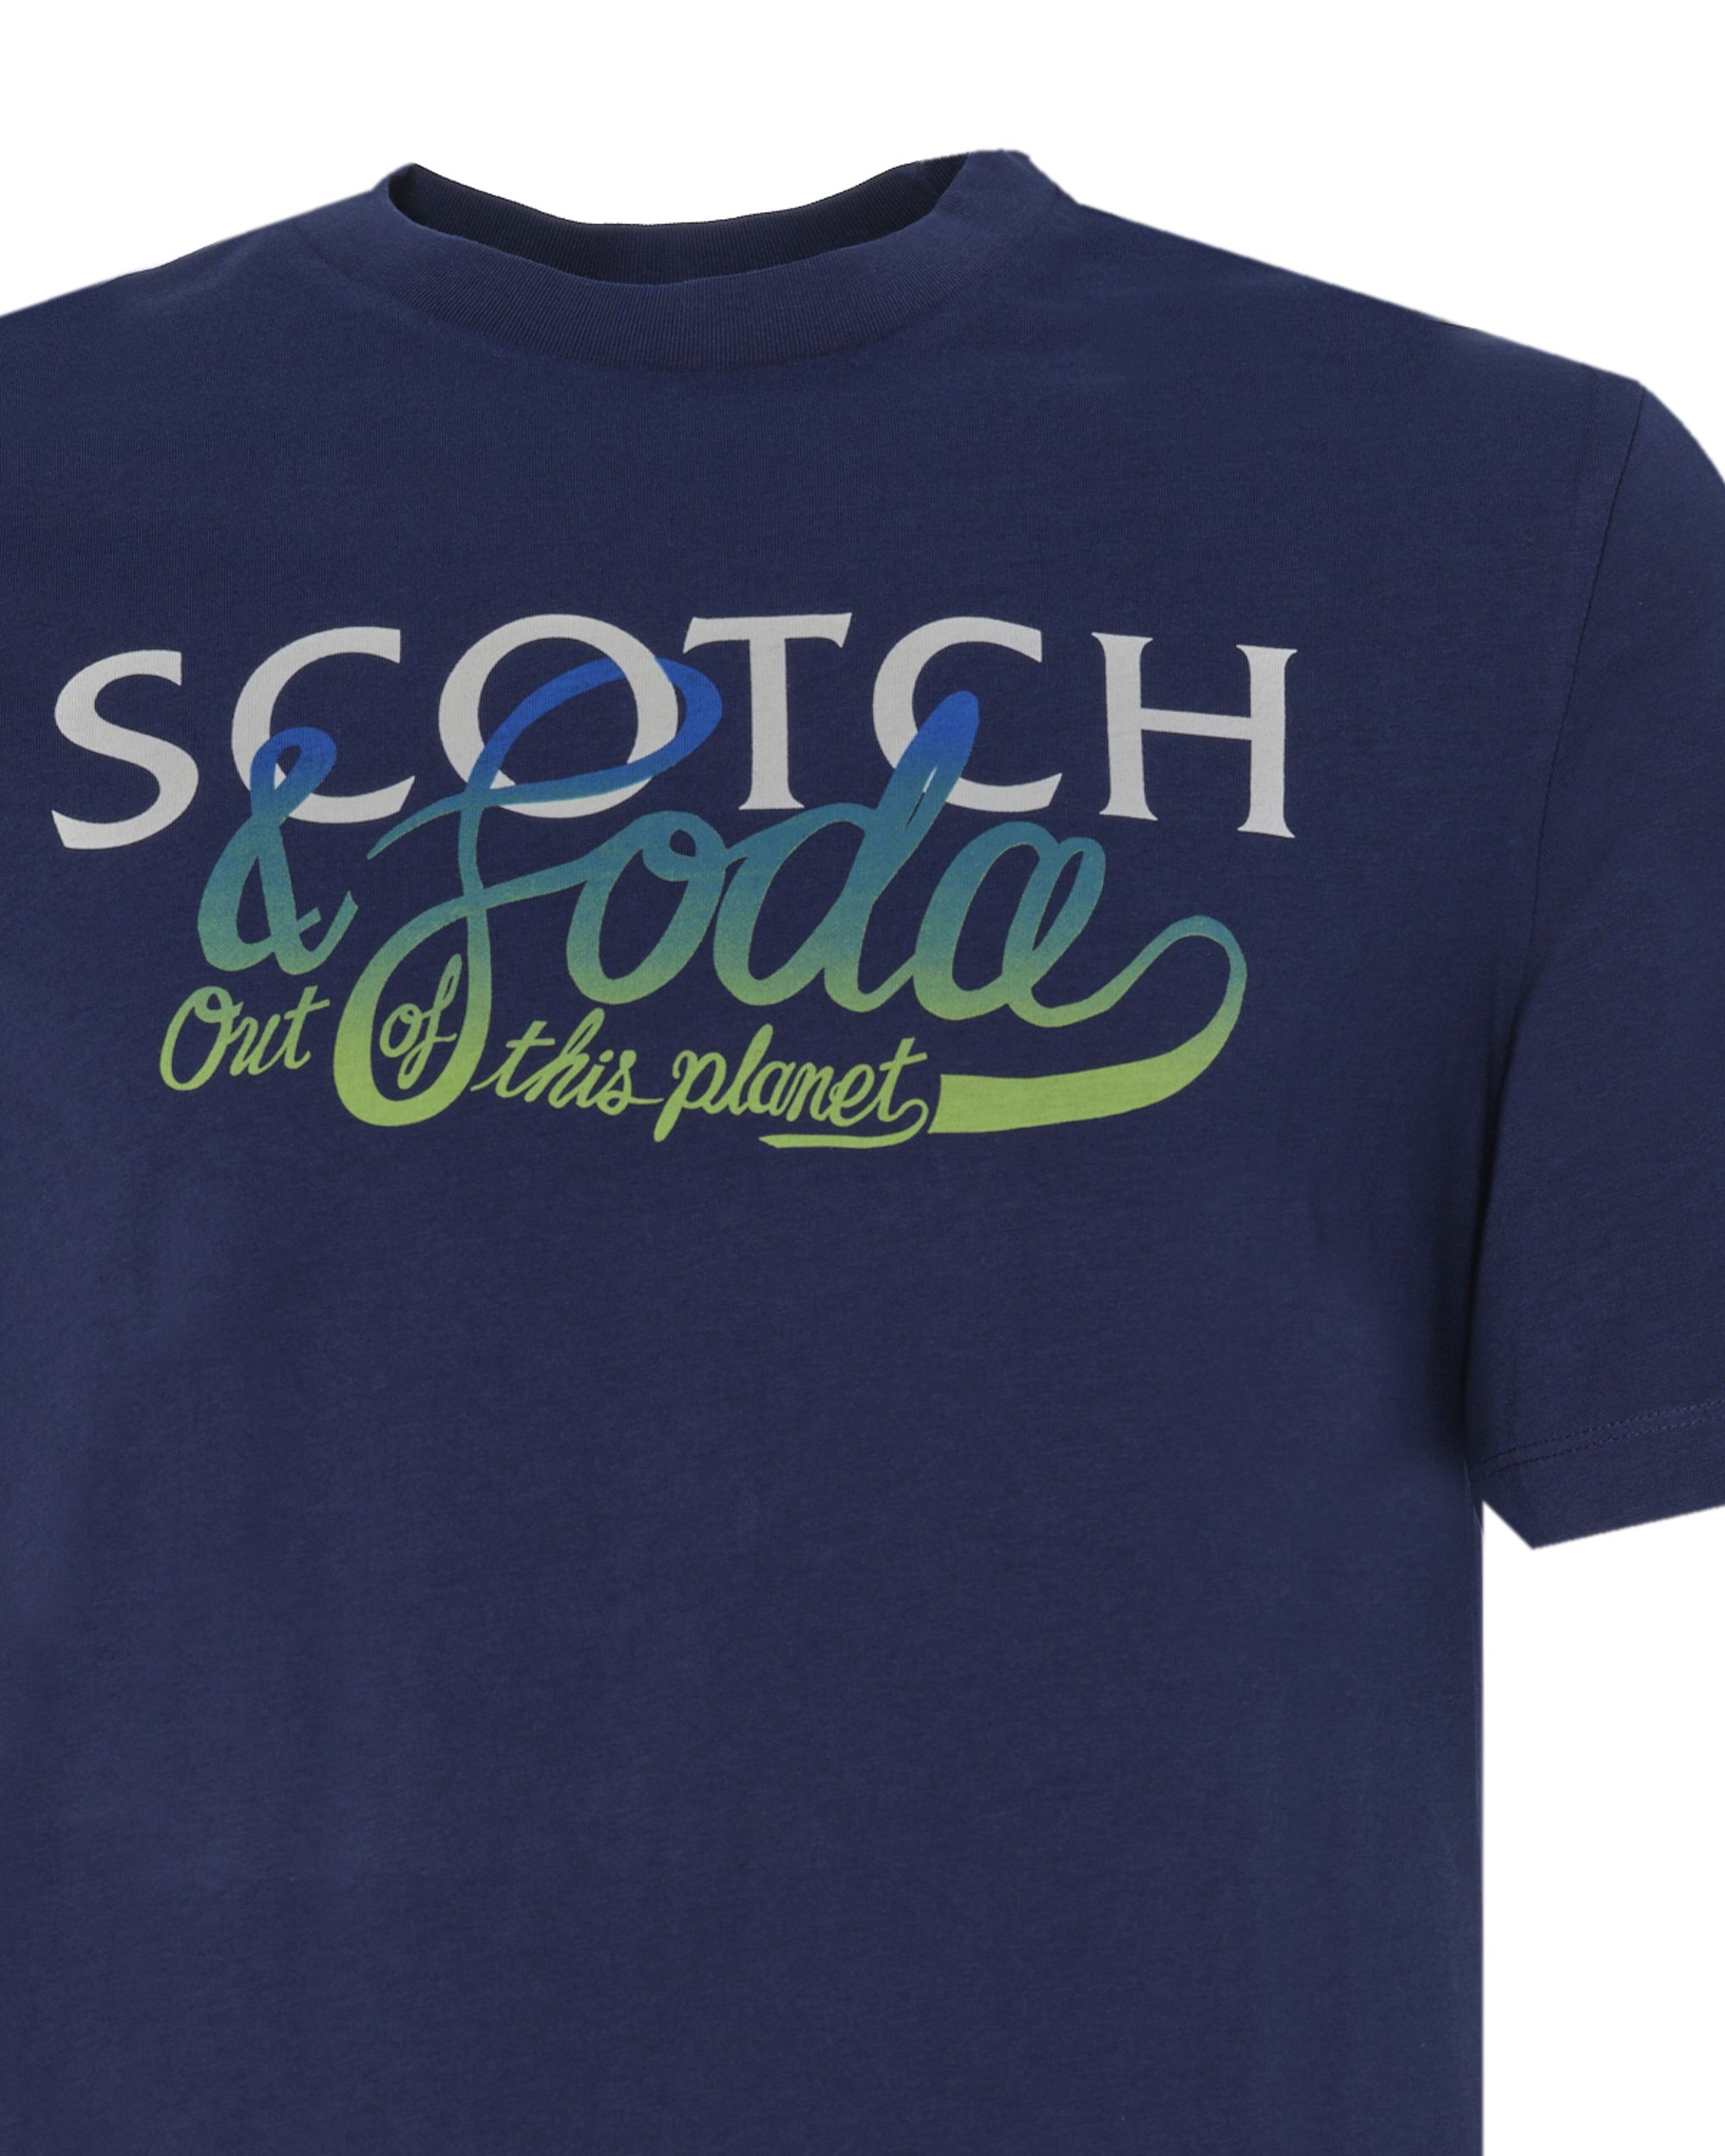 Scotch & Soda T-shirt KM Donker blauw 080196-001-L